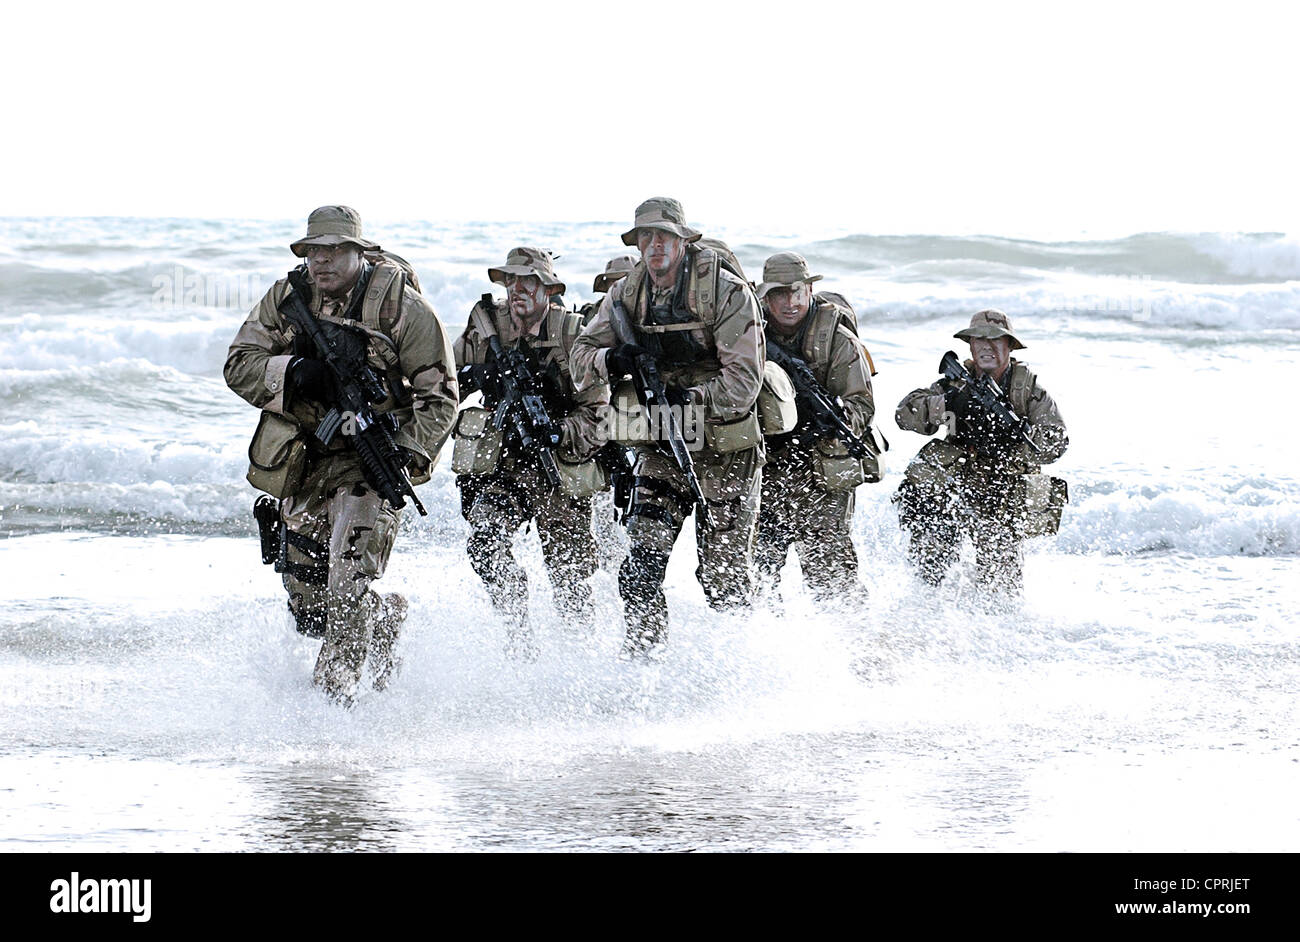 US Navy SEALs practice beach landings during combat training Stock Photo